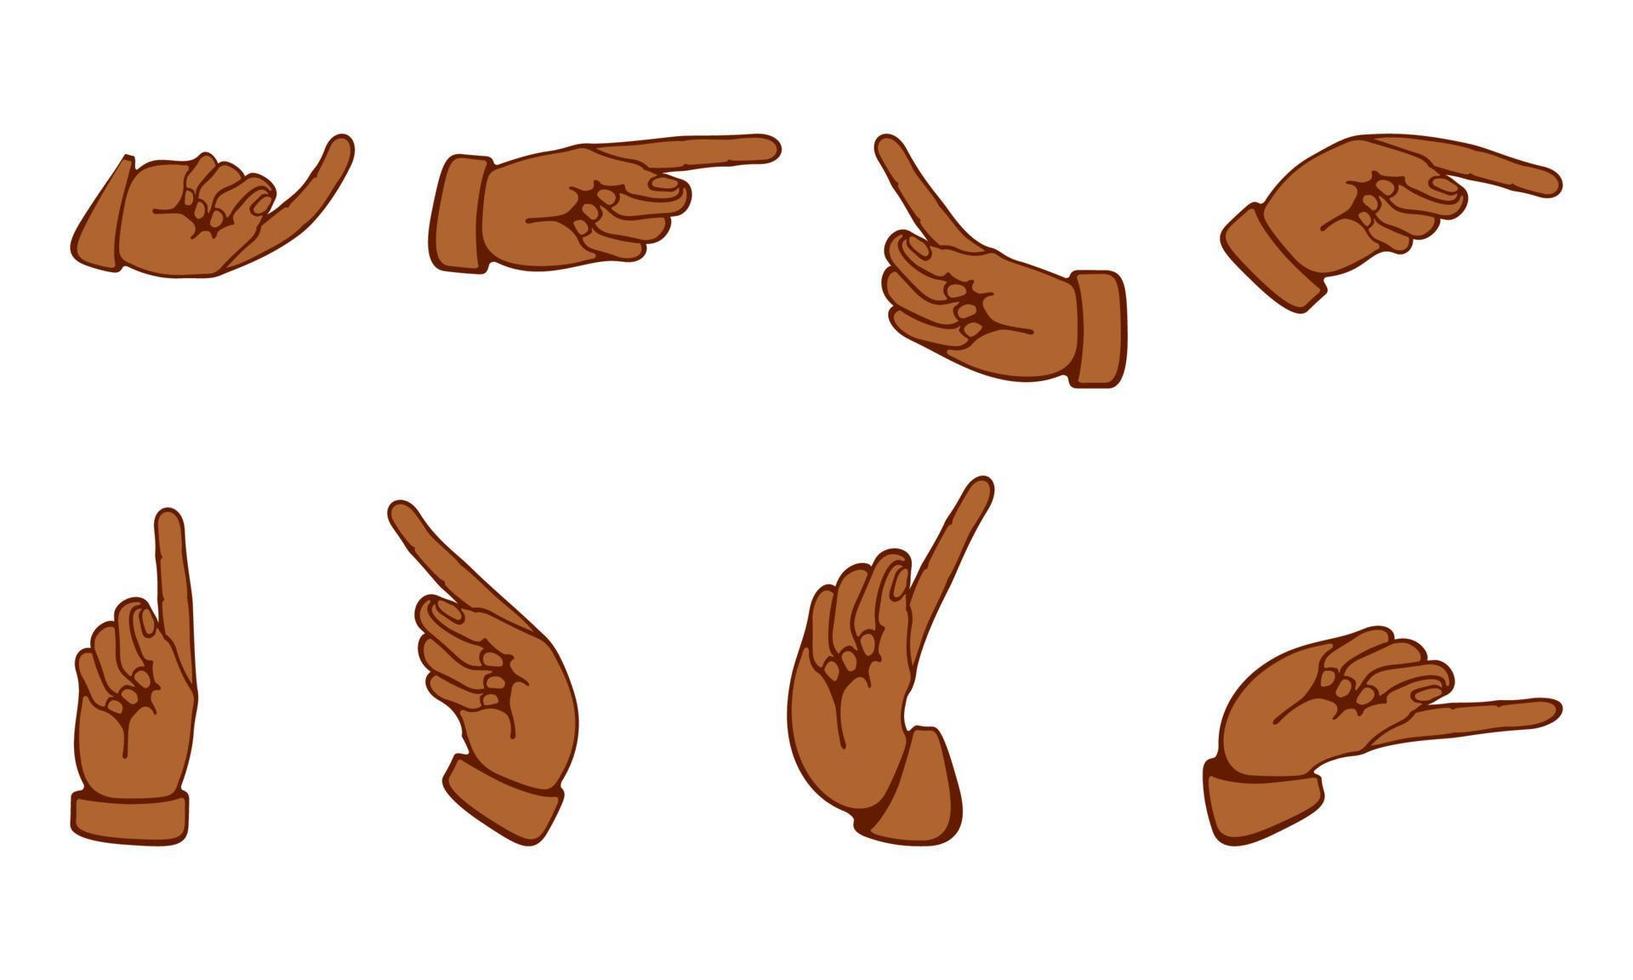 en samling av pekande finger illustrationer, med olika uttryck vektor